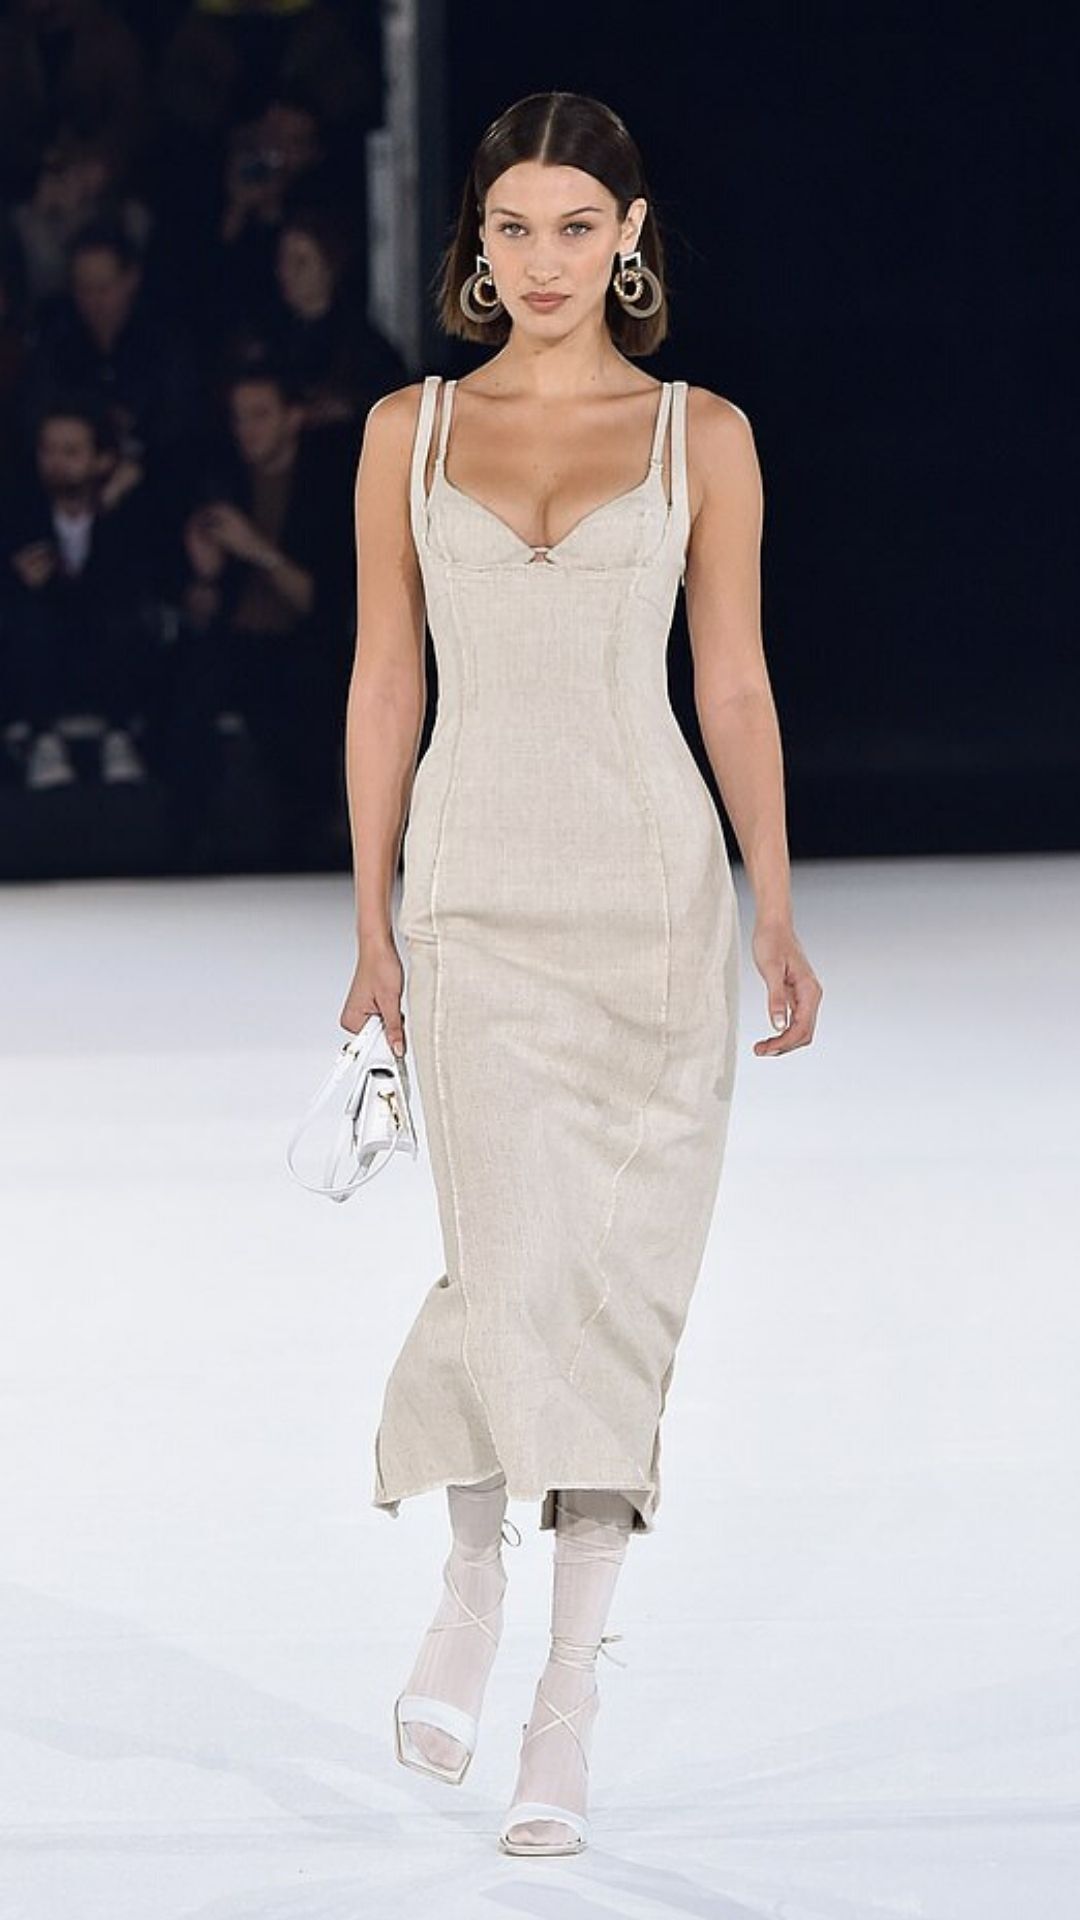 Gigi Hadid Jacquemus Fall Fashion Show January 18, 2020 – Star Style